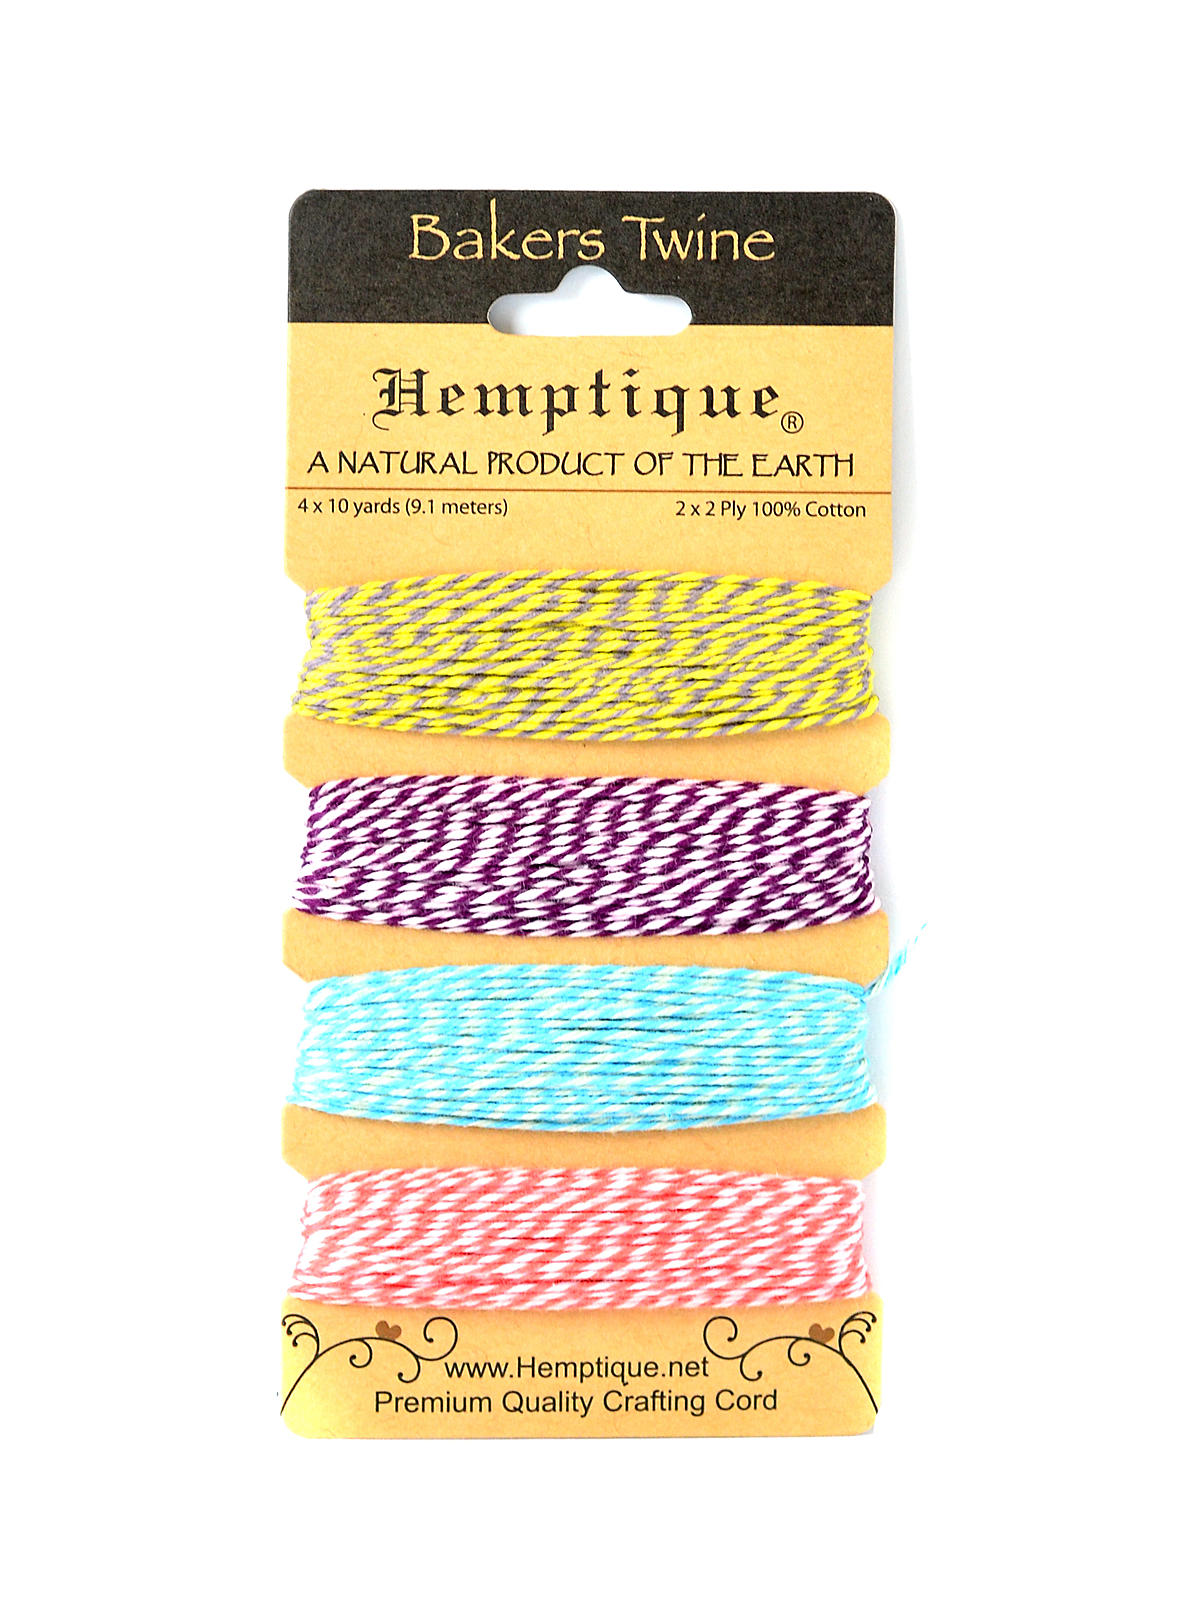 Hemptique - Bakers Twine Cards